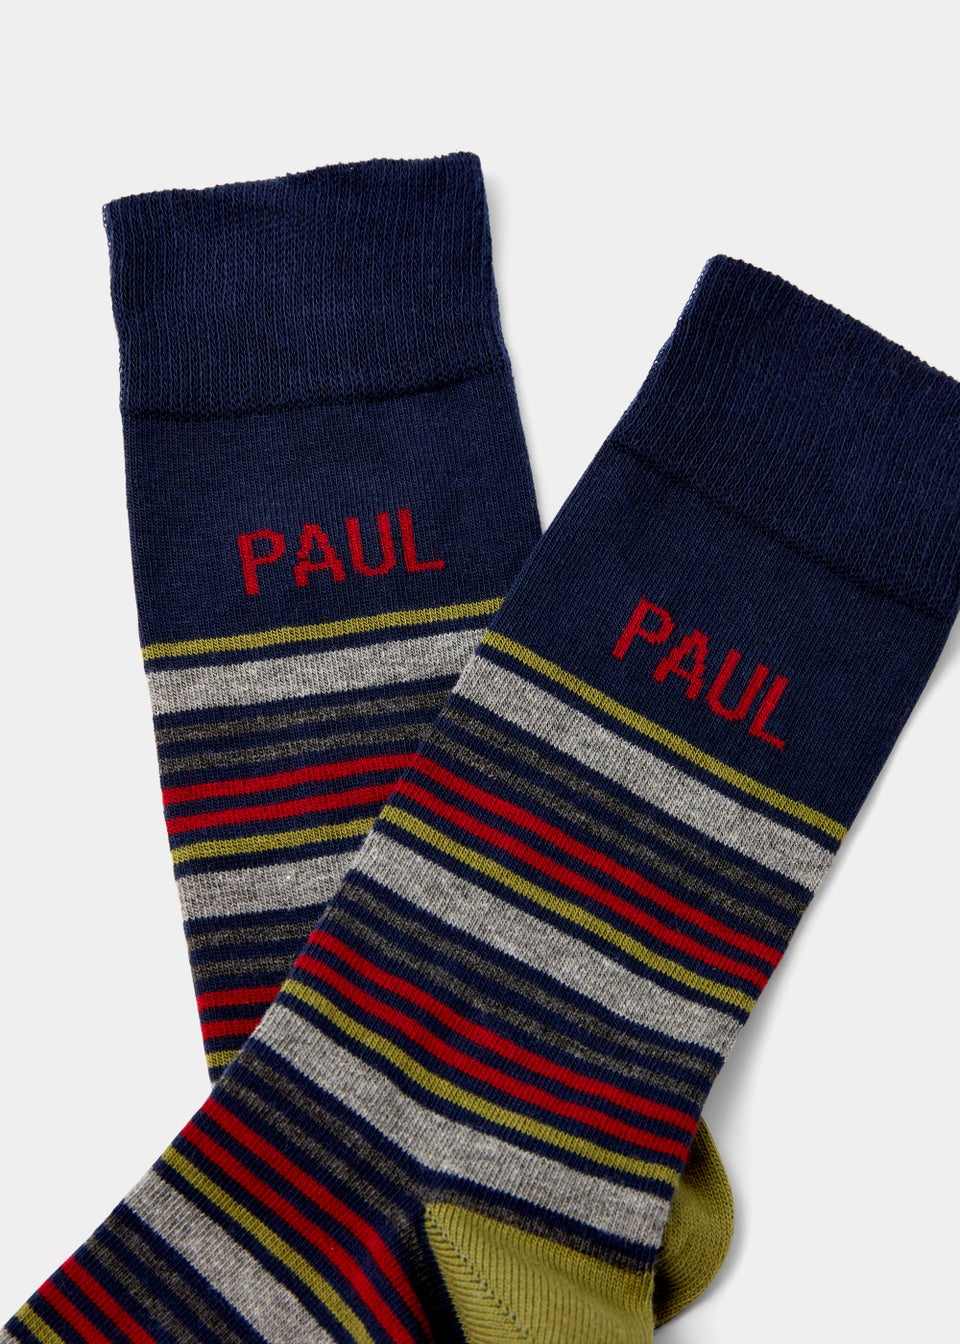 Multicoloured Paul Name Socks